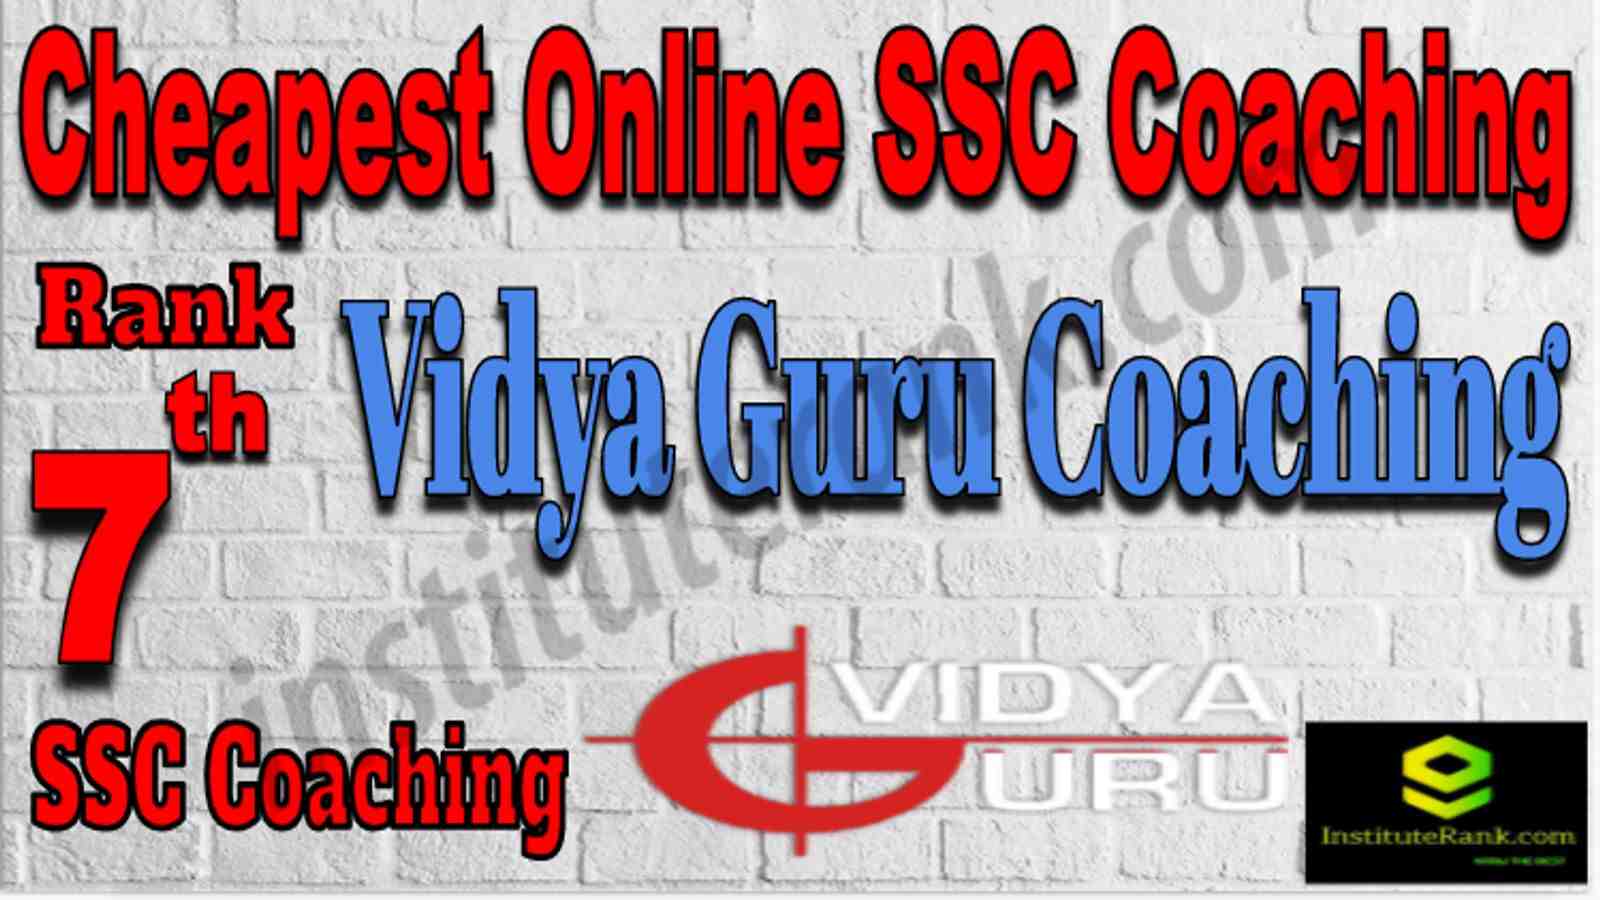 Rank 7 Cheapest Online SSC Coaching